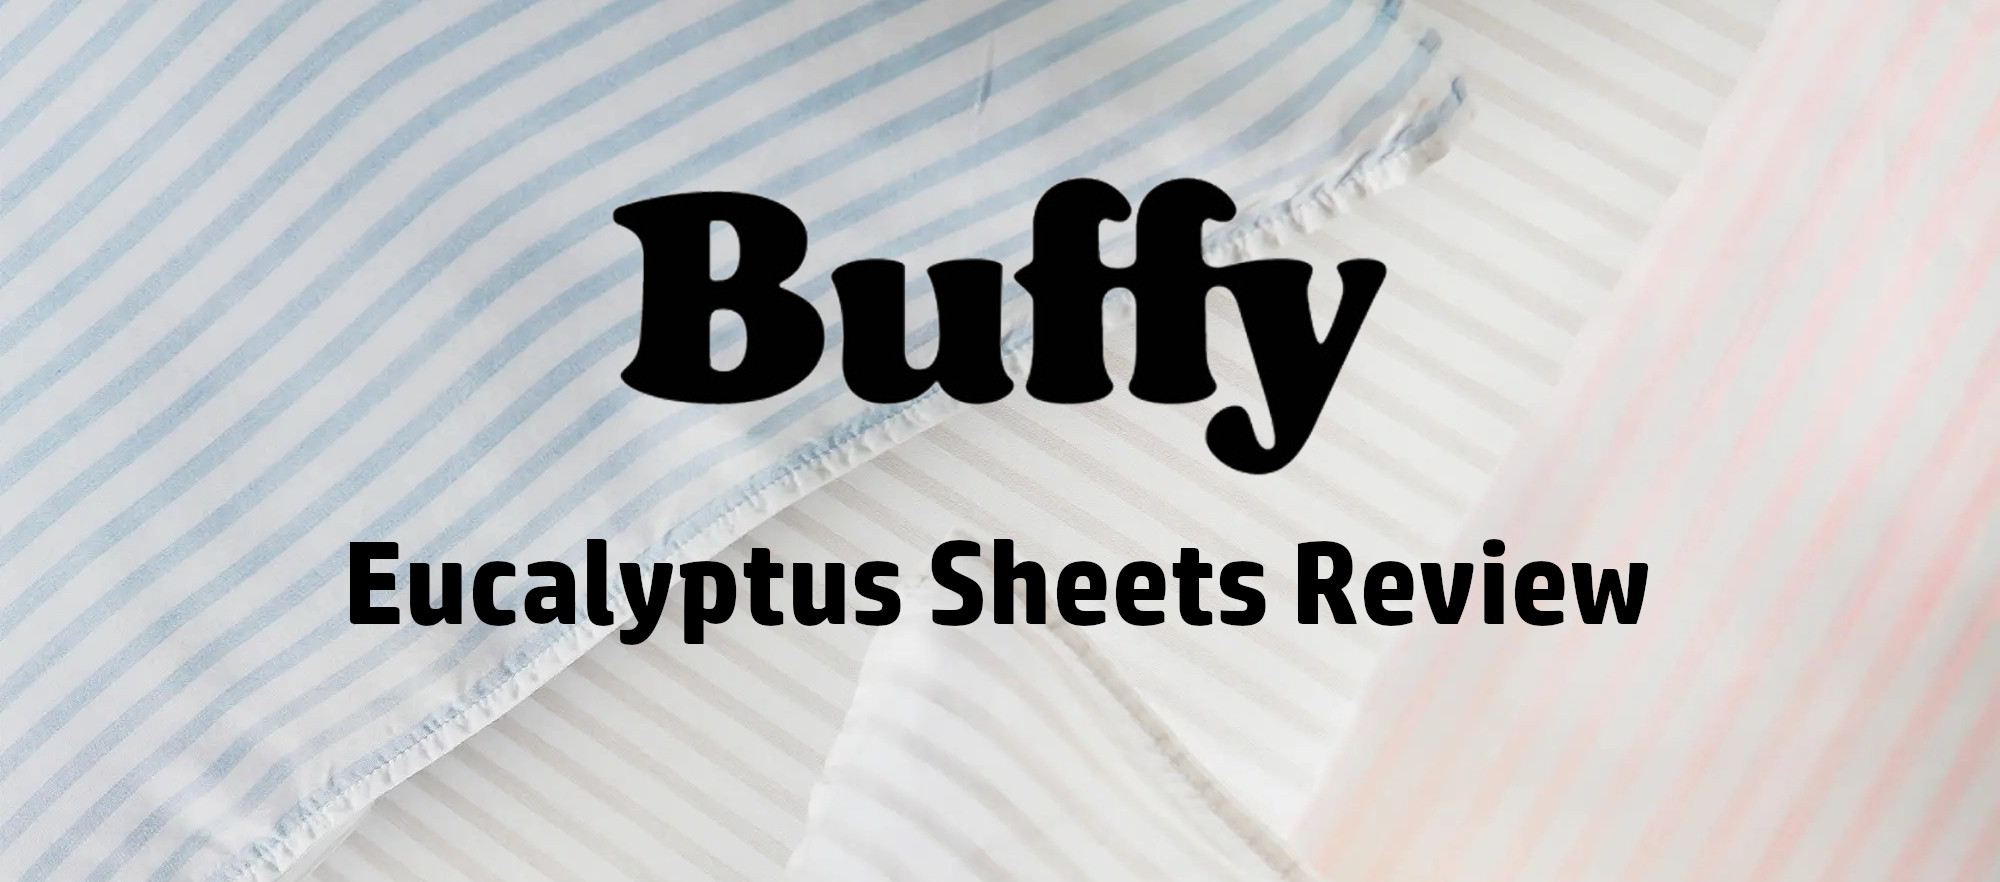 buffy eucalyptus sheets review